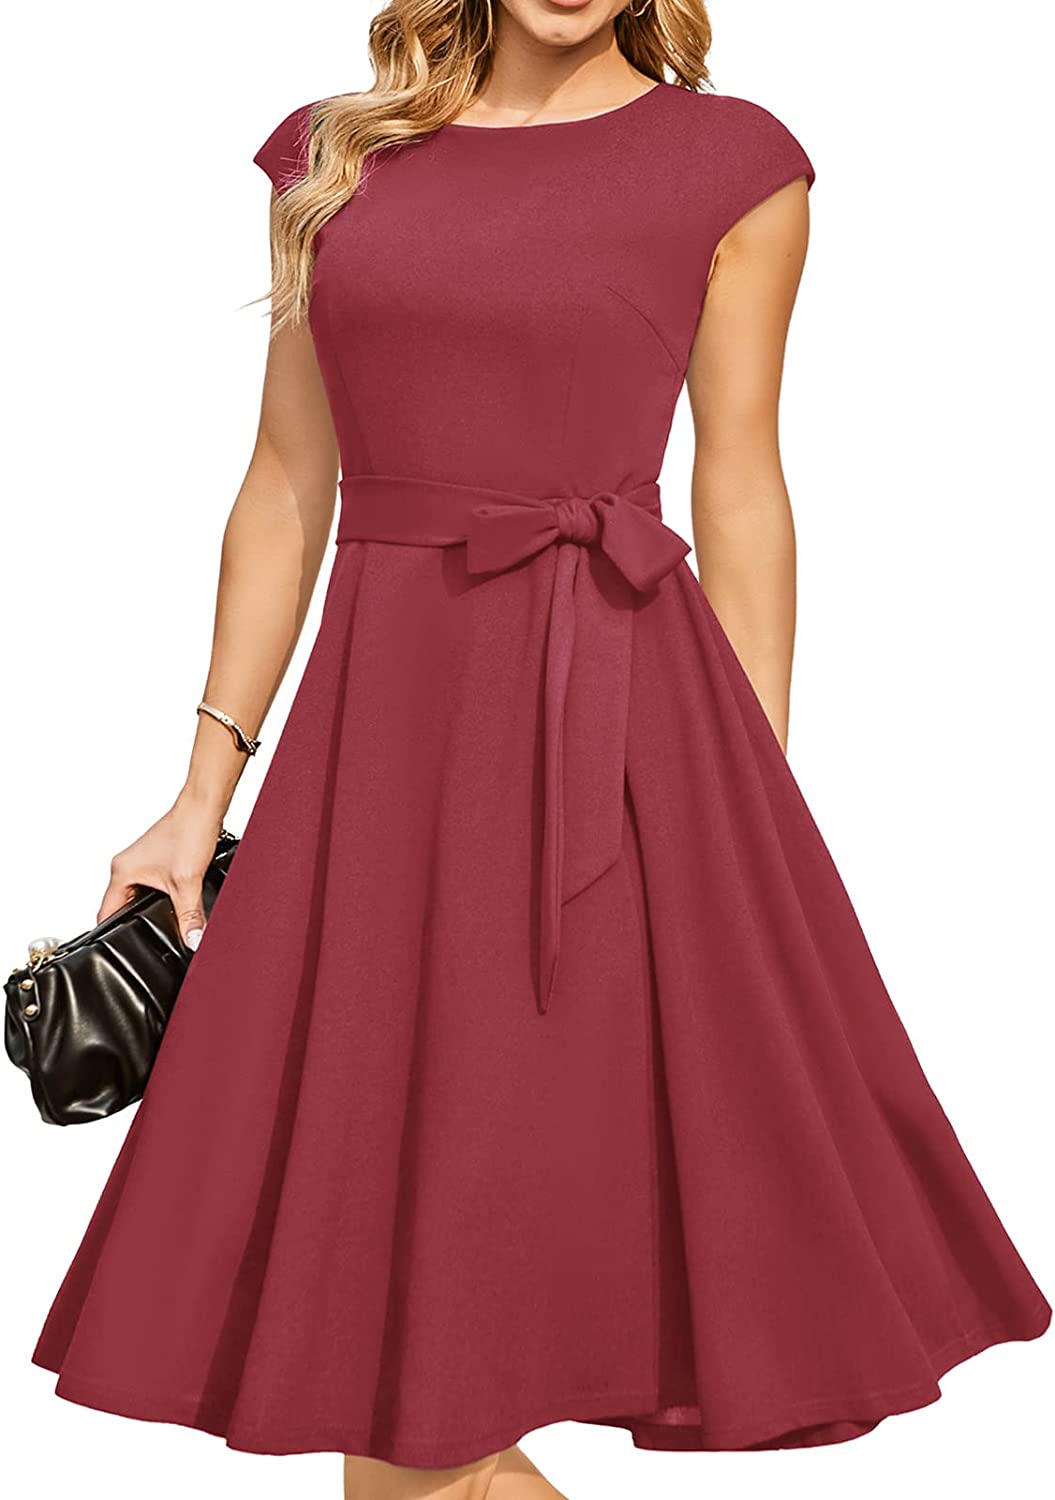 Women's Dresses: Shop Casual Dresses & Skirts